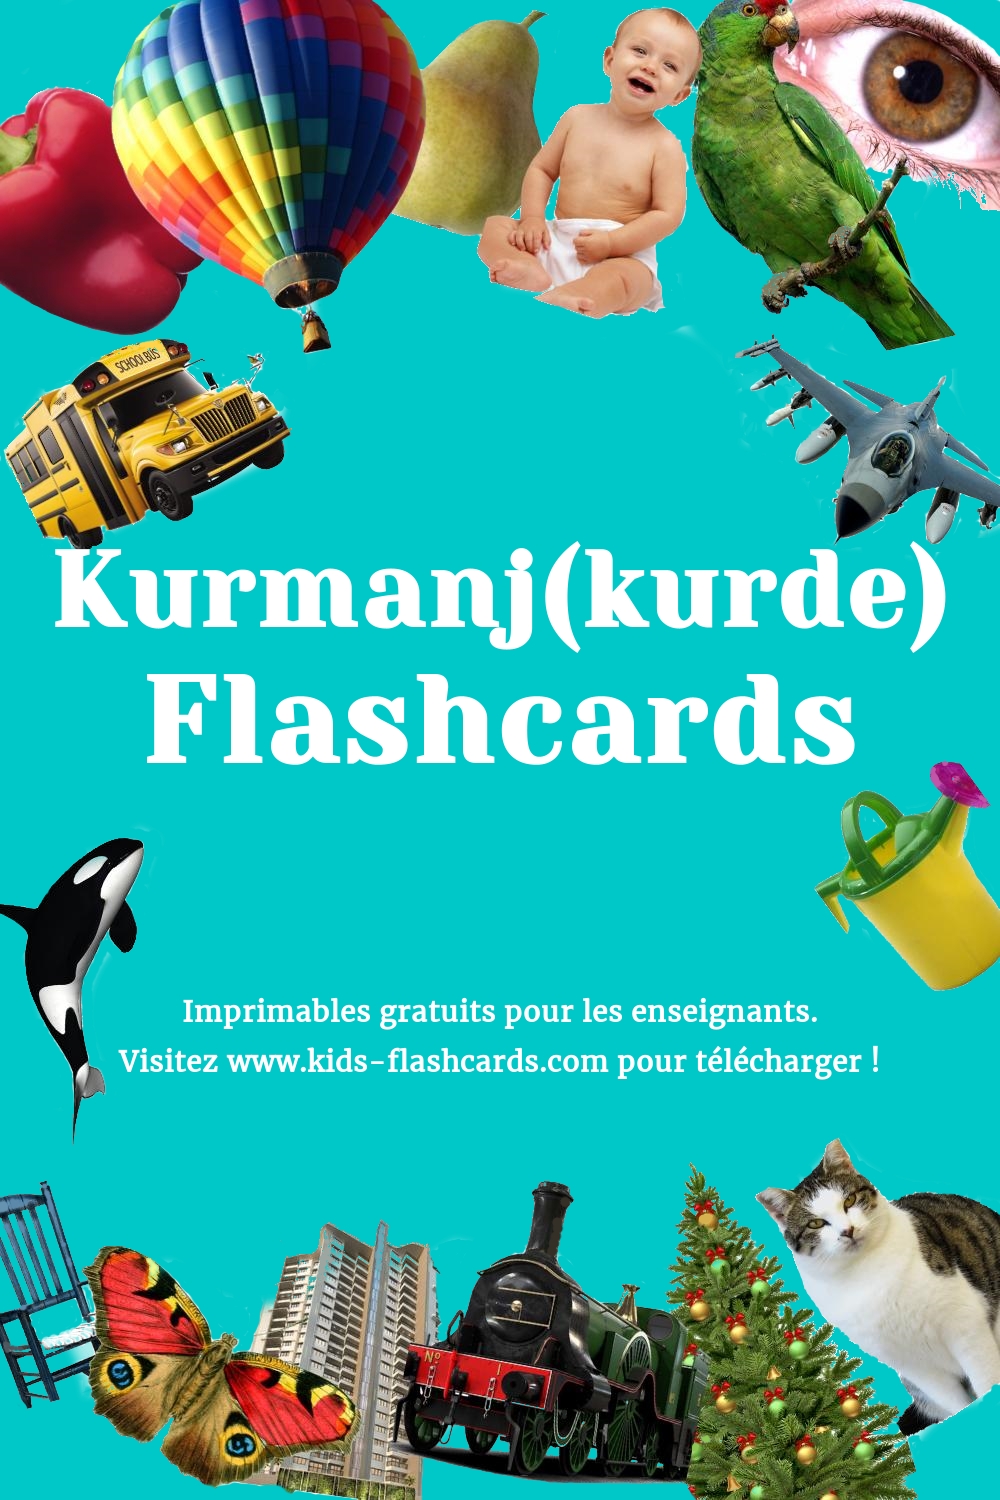 Imprimables gratuits en Kurmanj(kurde)